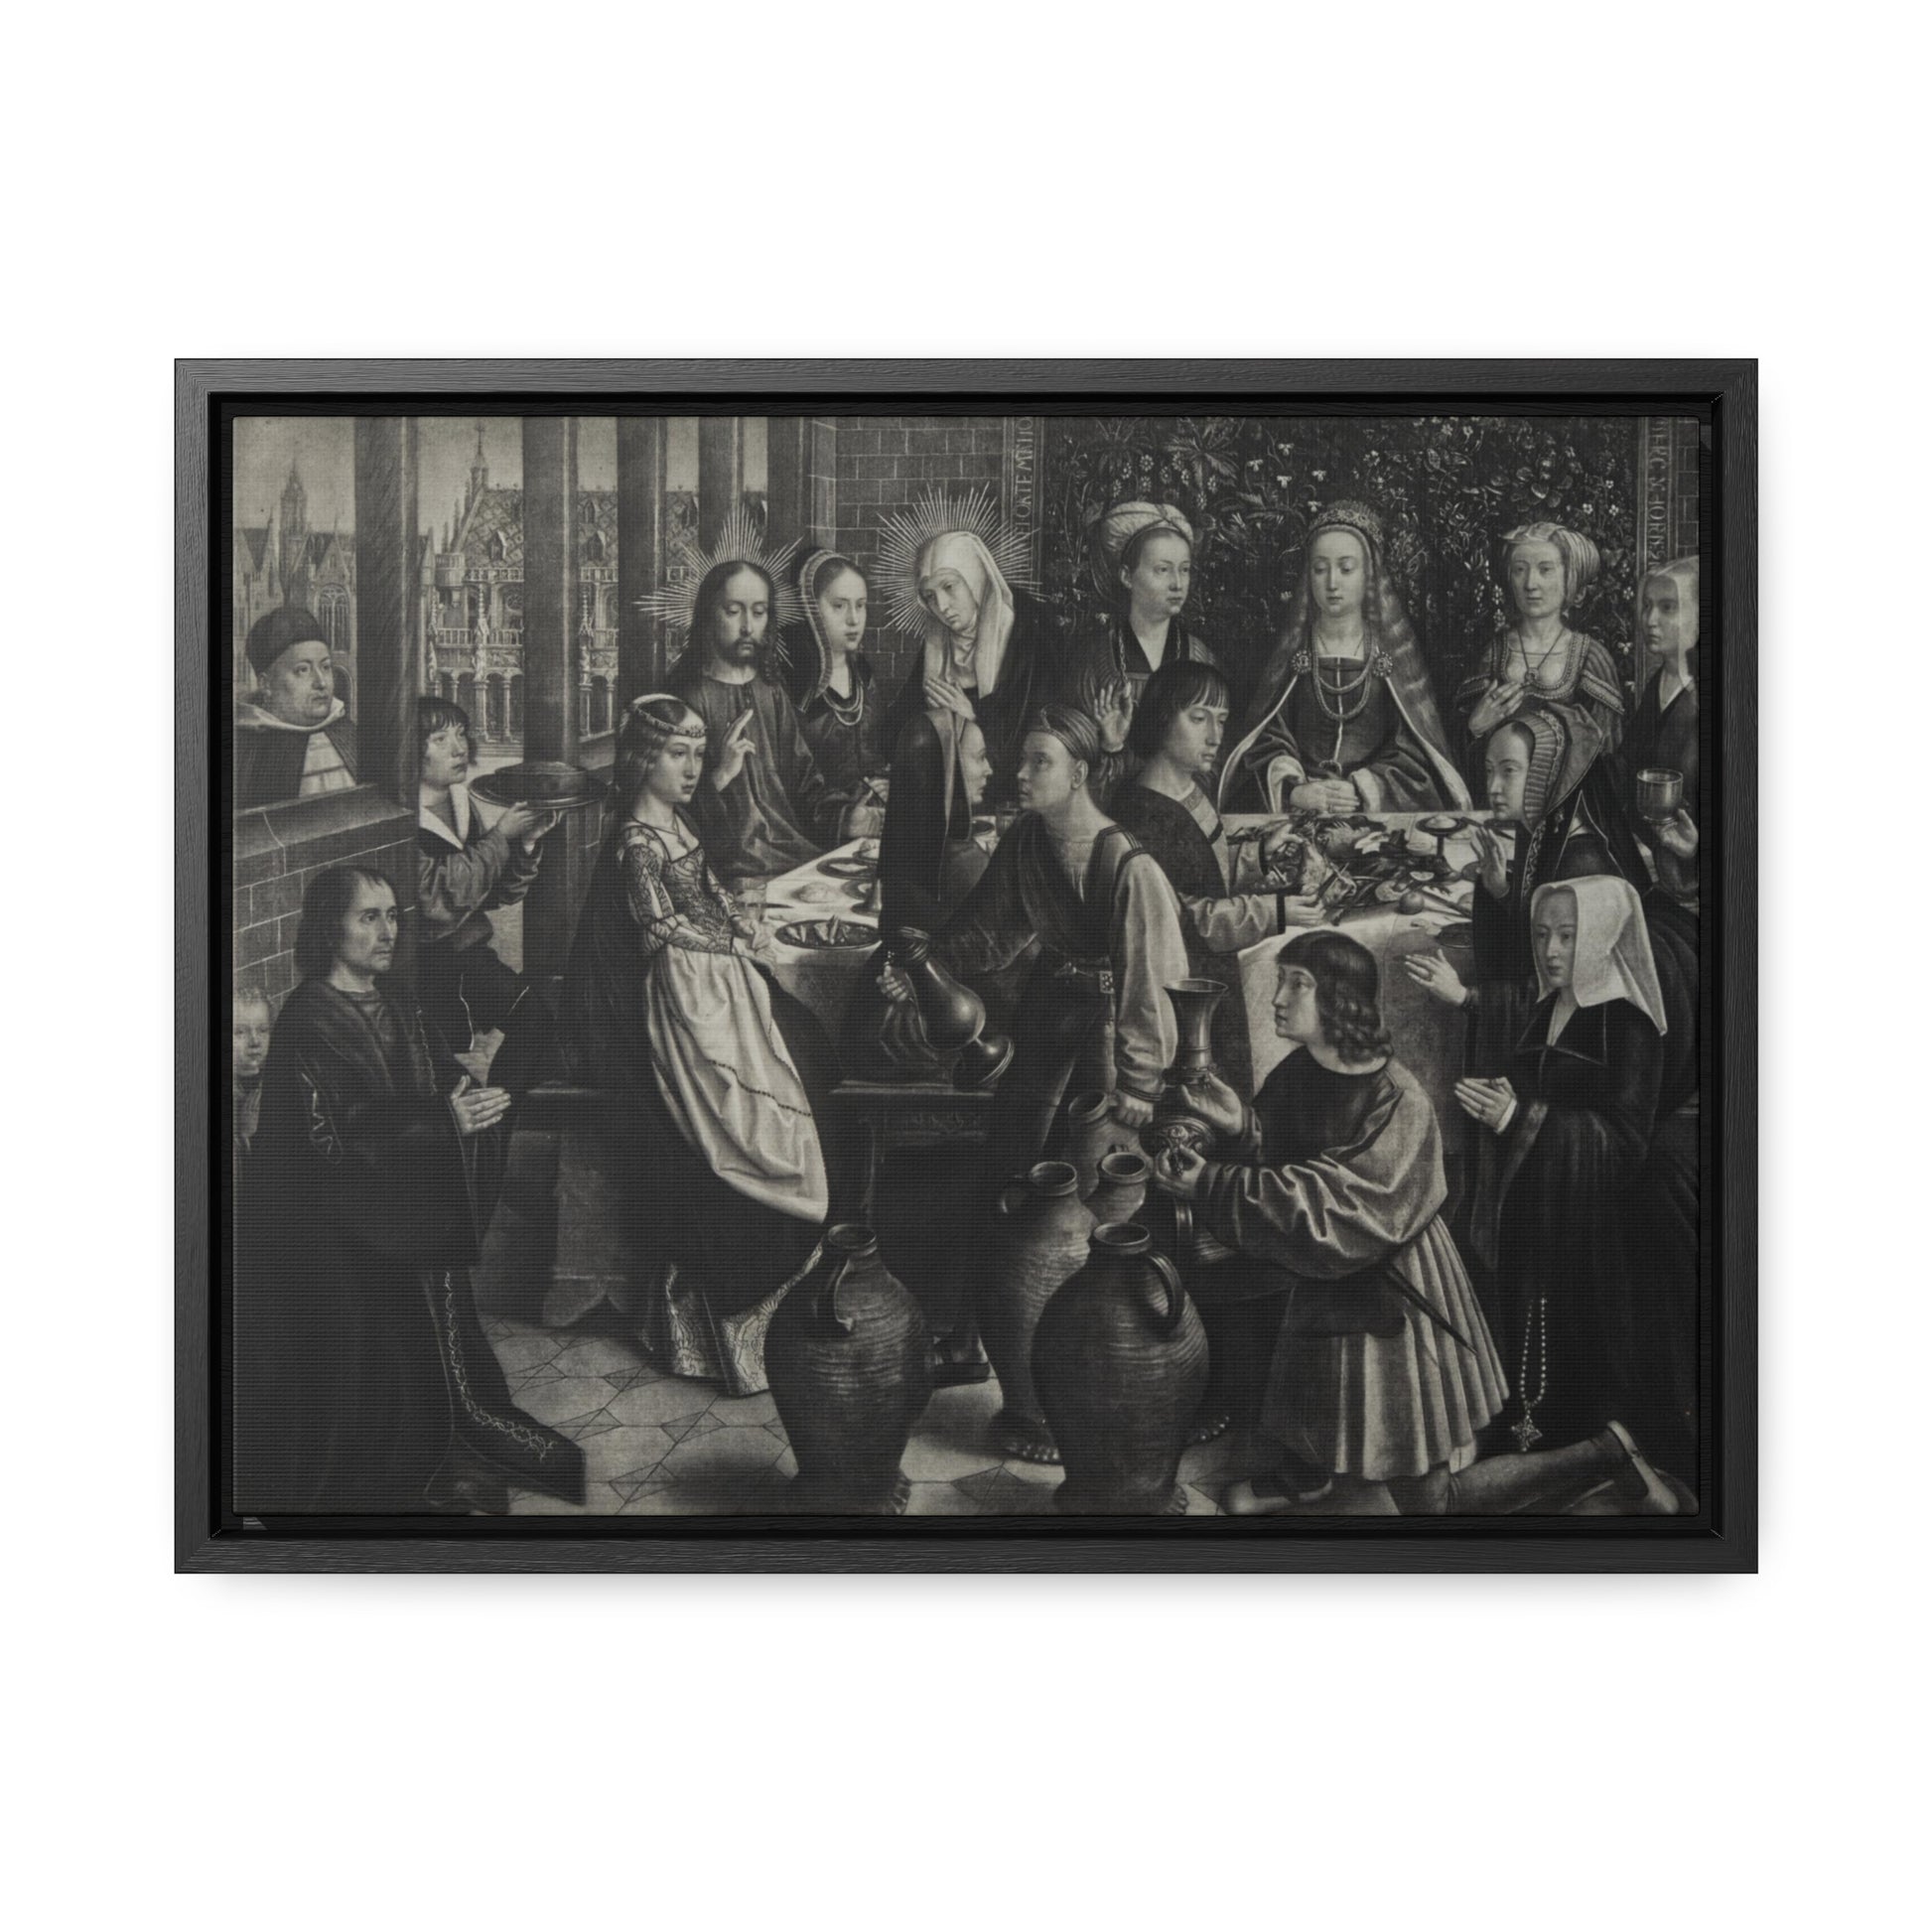 Wedding at Cana Framed Canvas -Jacques-Louis David - Sanctus Art Gallery